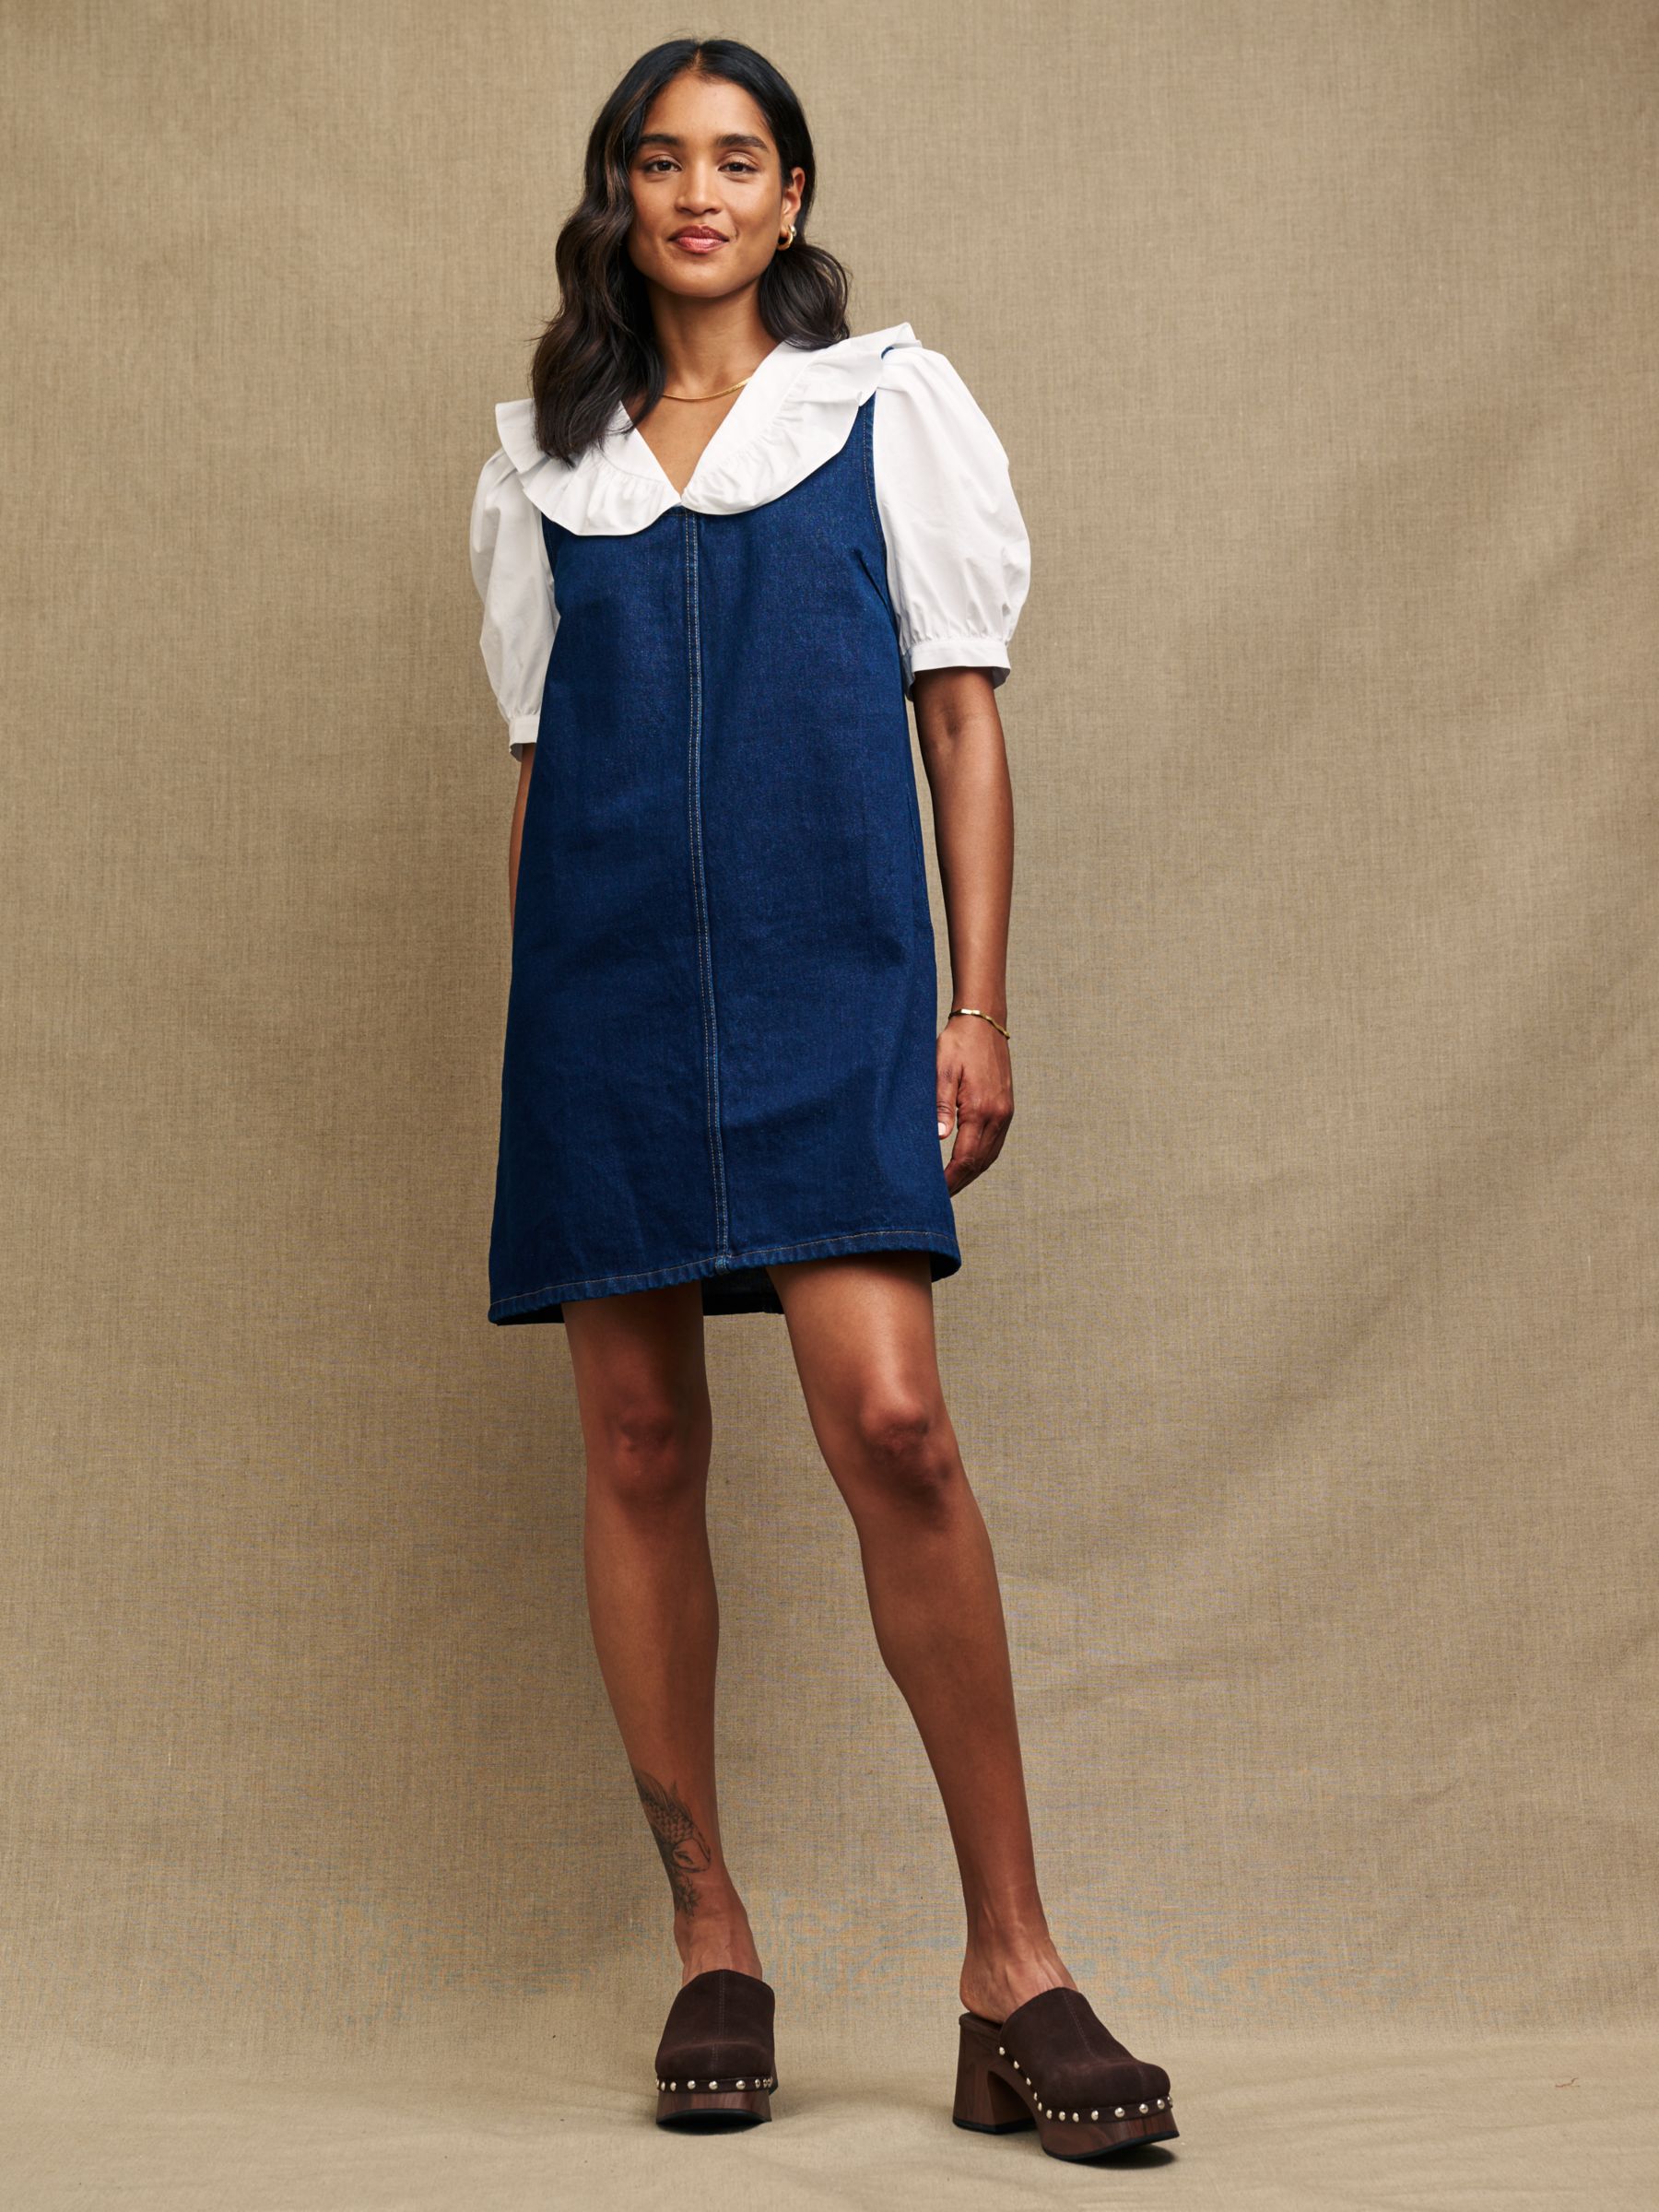 Plus Size Dark Blue Pockets Midi Denim Dungaree Dress – Pluspreorder